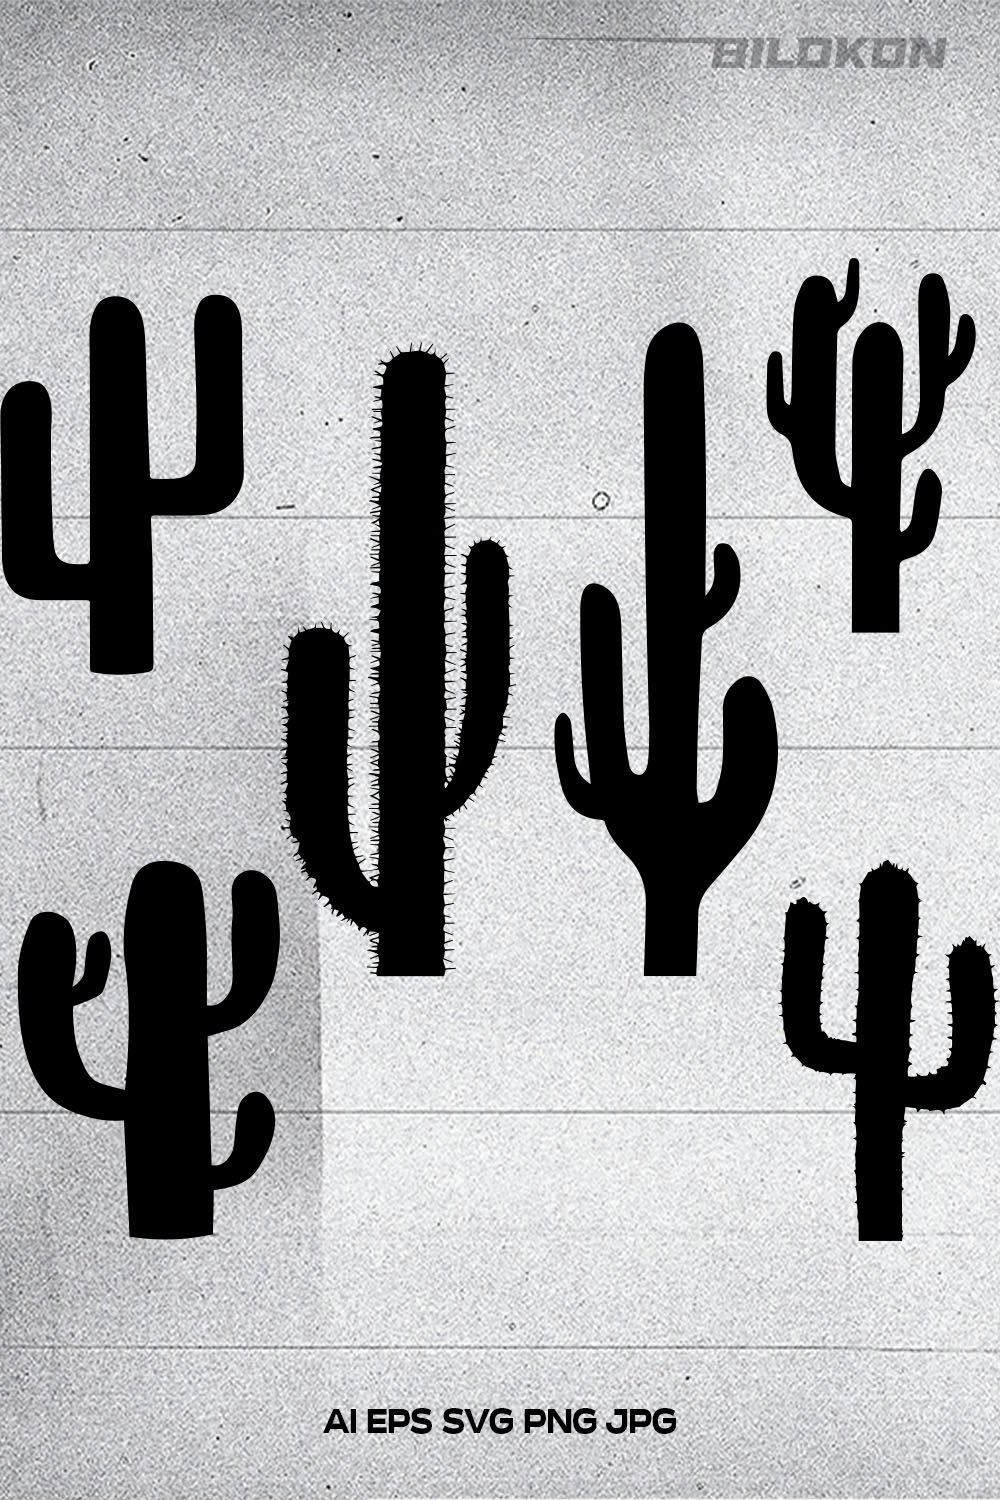 Cactus Silhouettes Set Icon, SVG Vector Illustration - Pinterest.